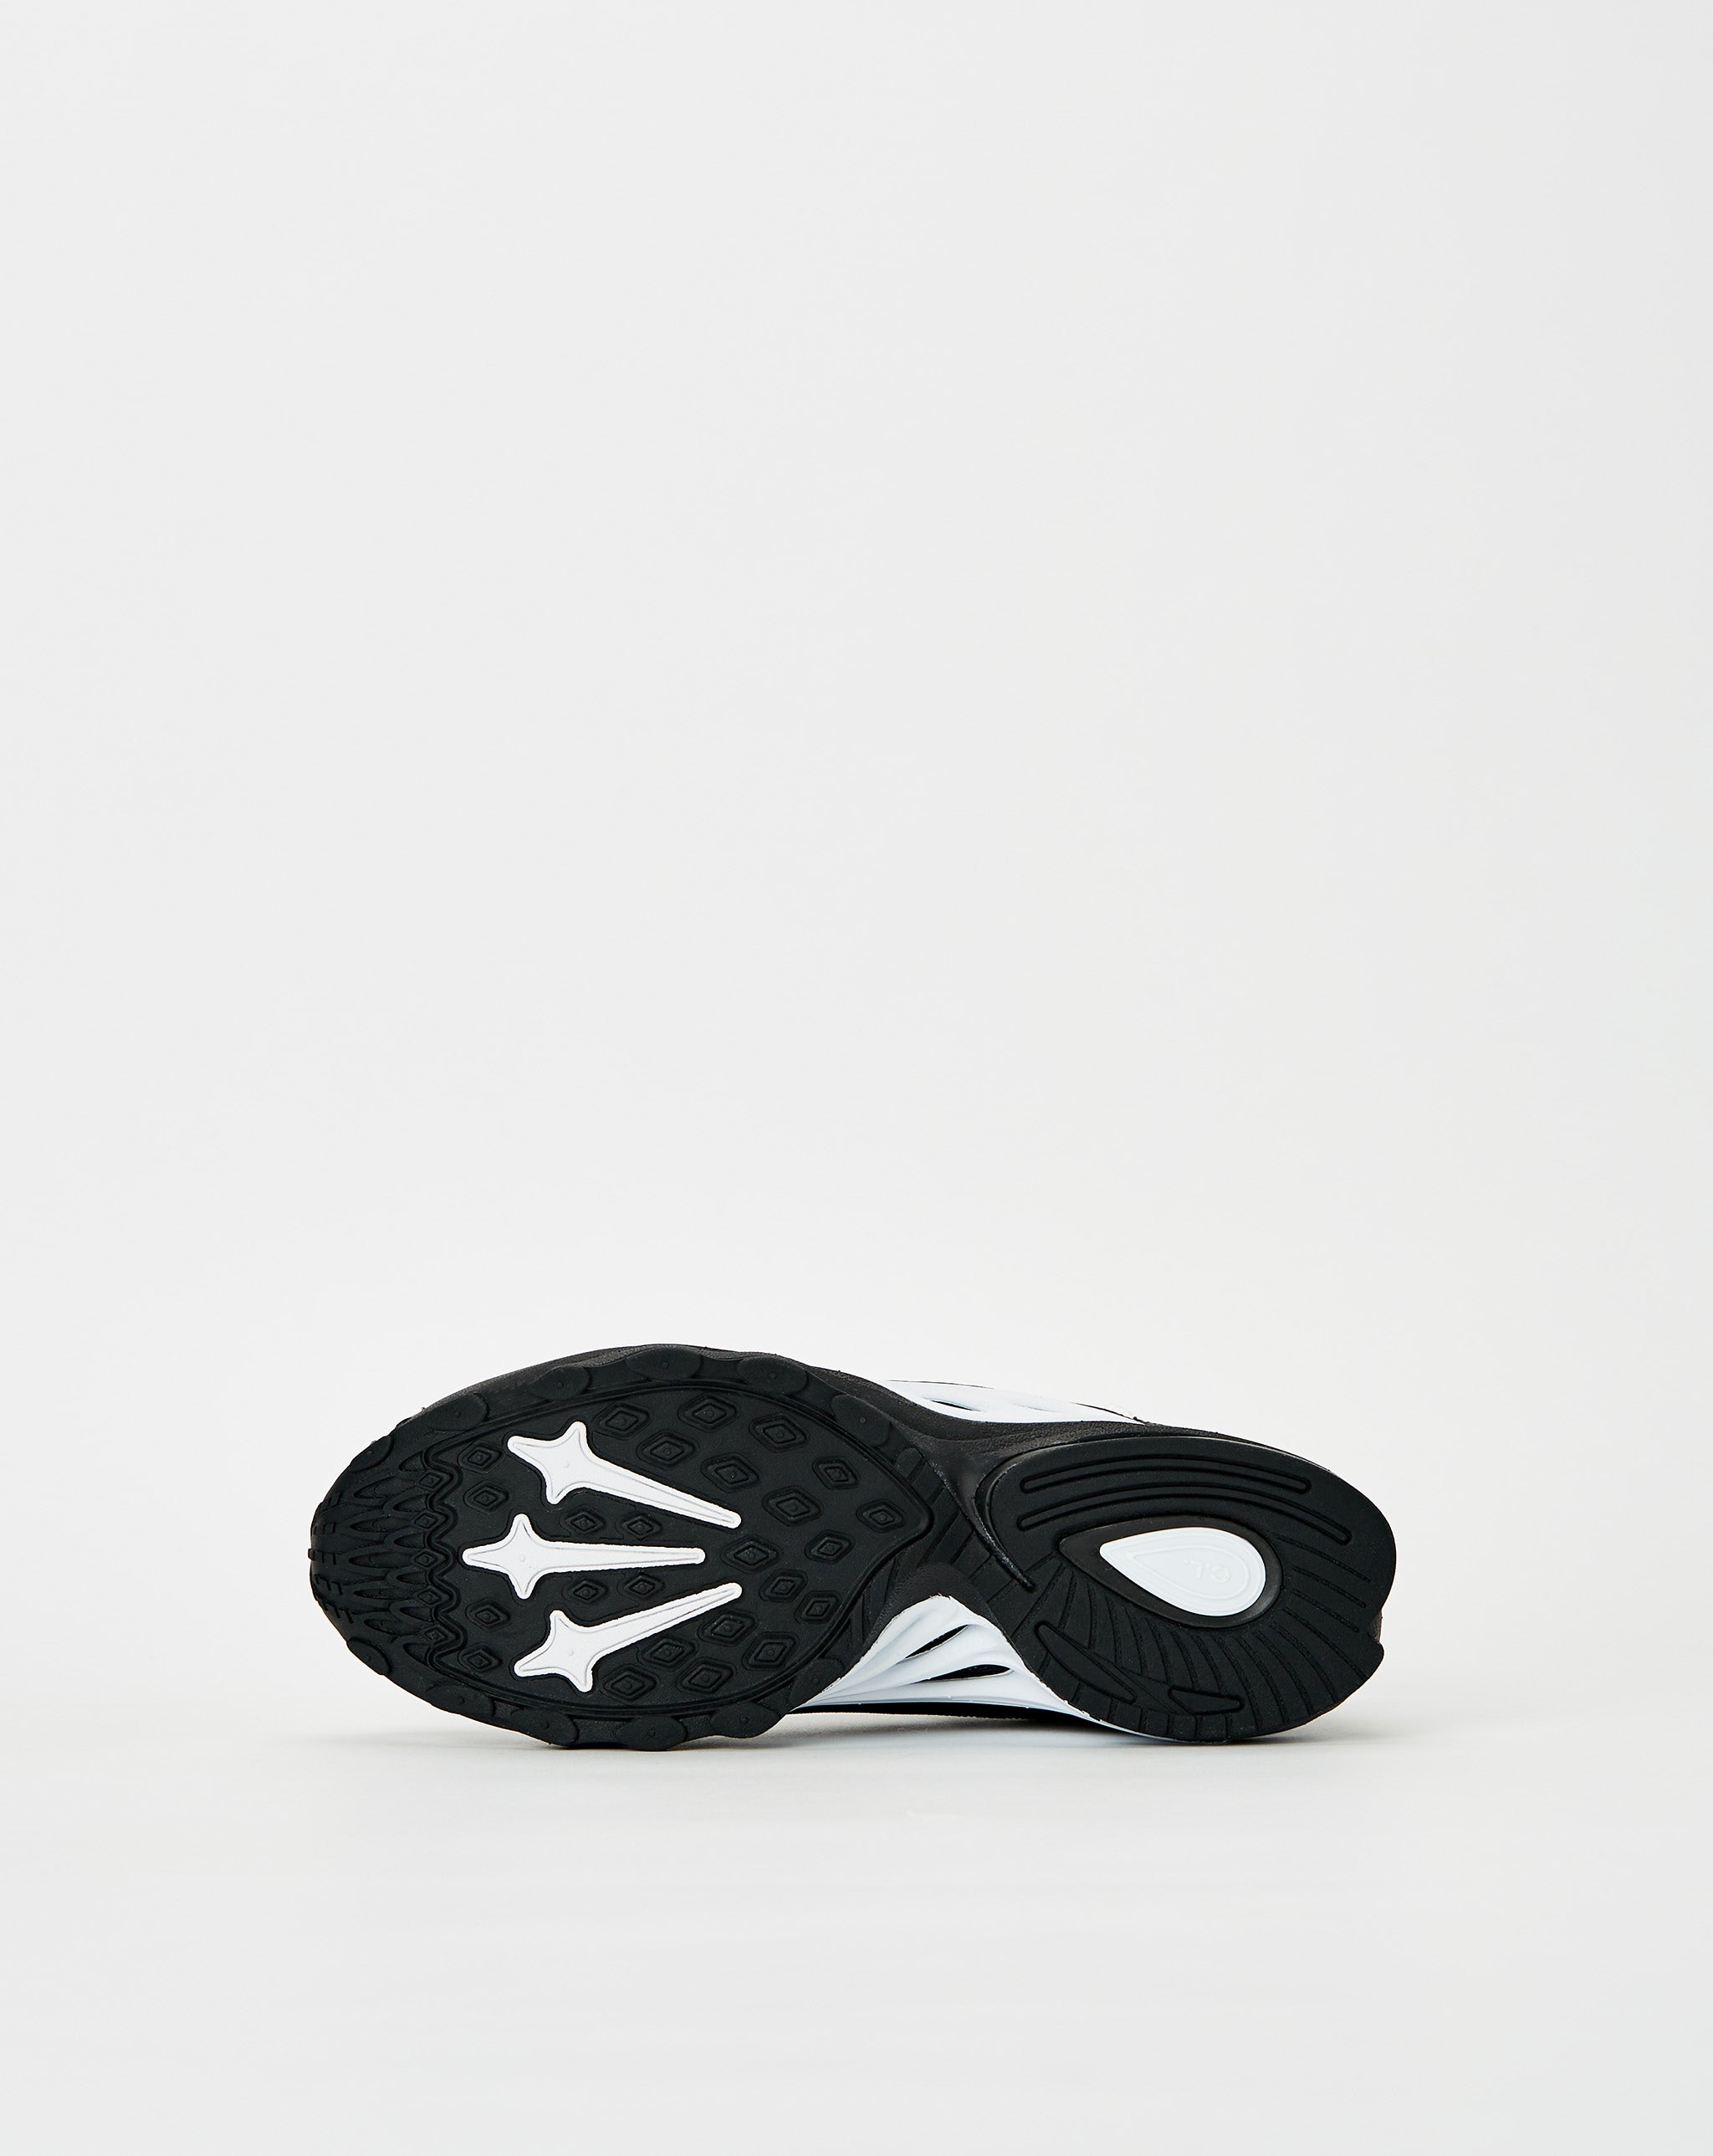 Nike Sneaker Modell Suzie  - Cheap Erlebniswelt-fliegenfischen Jordan outlet